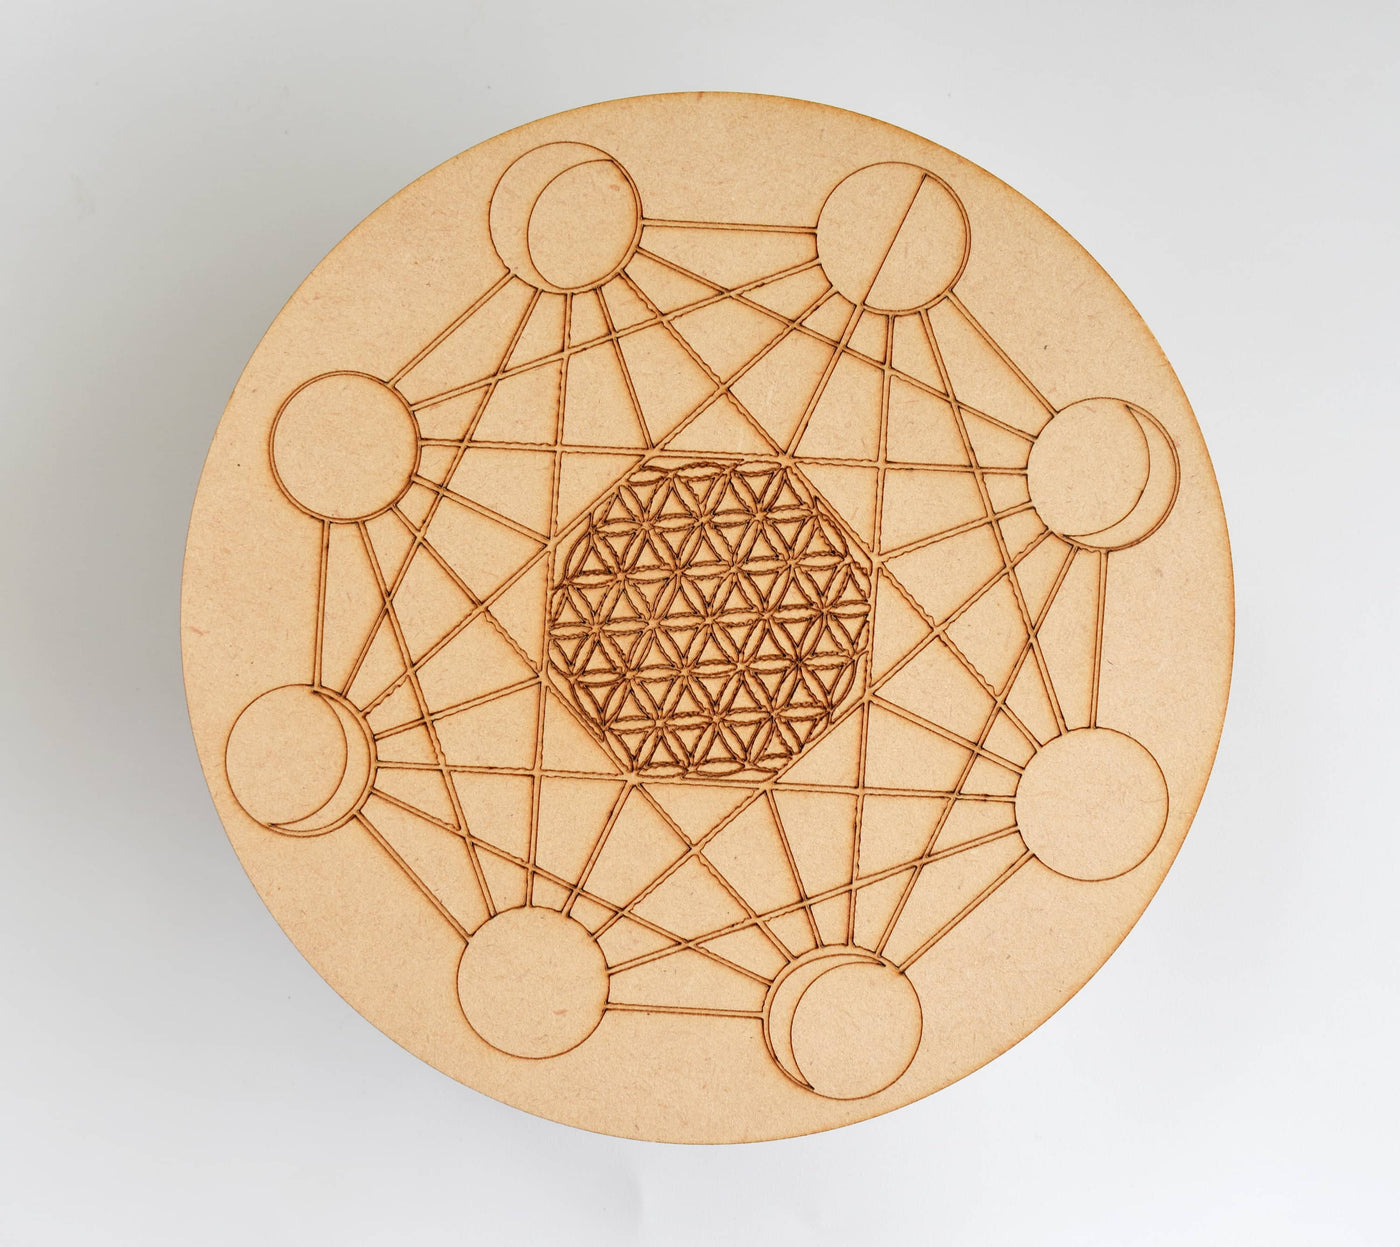 Metatron Cube Crystal Grid Board, 6" Wooden Crystal Grid Plate